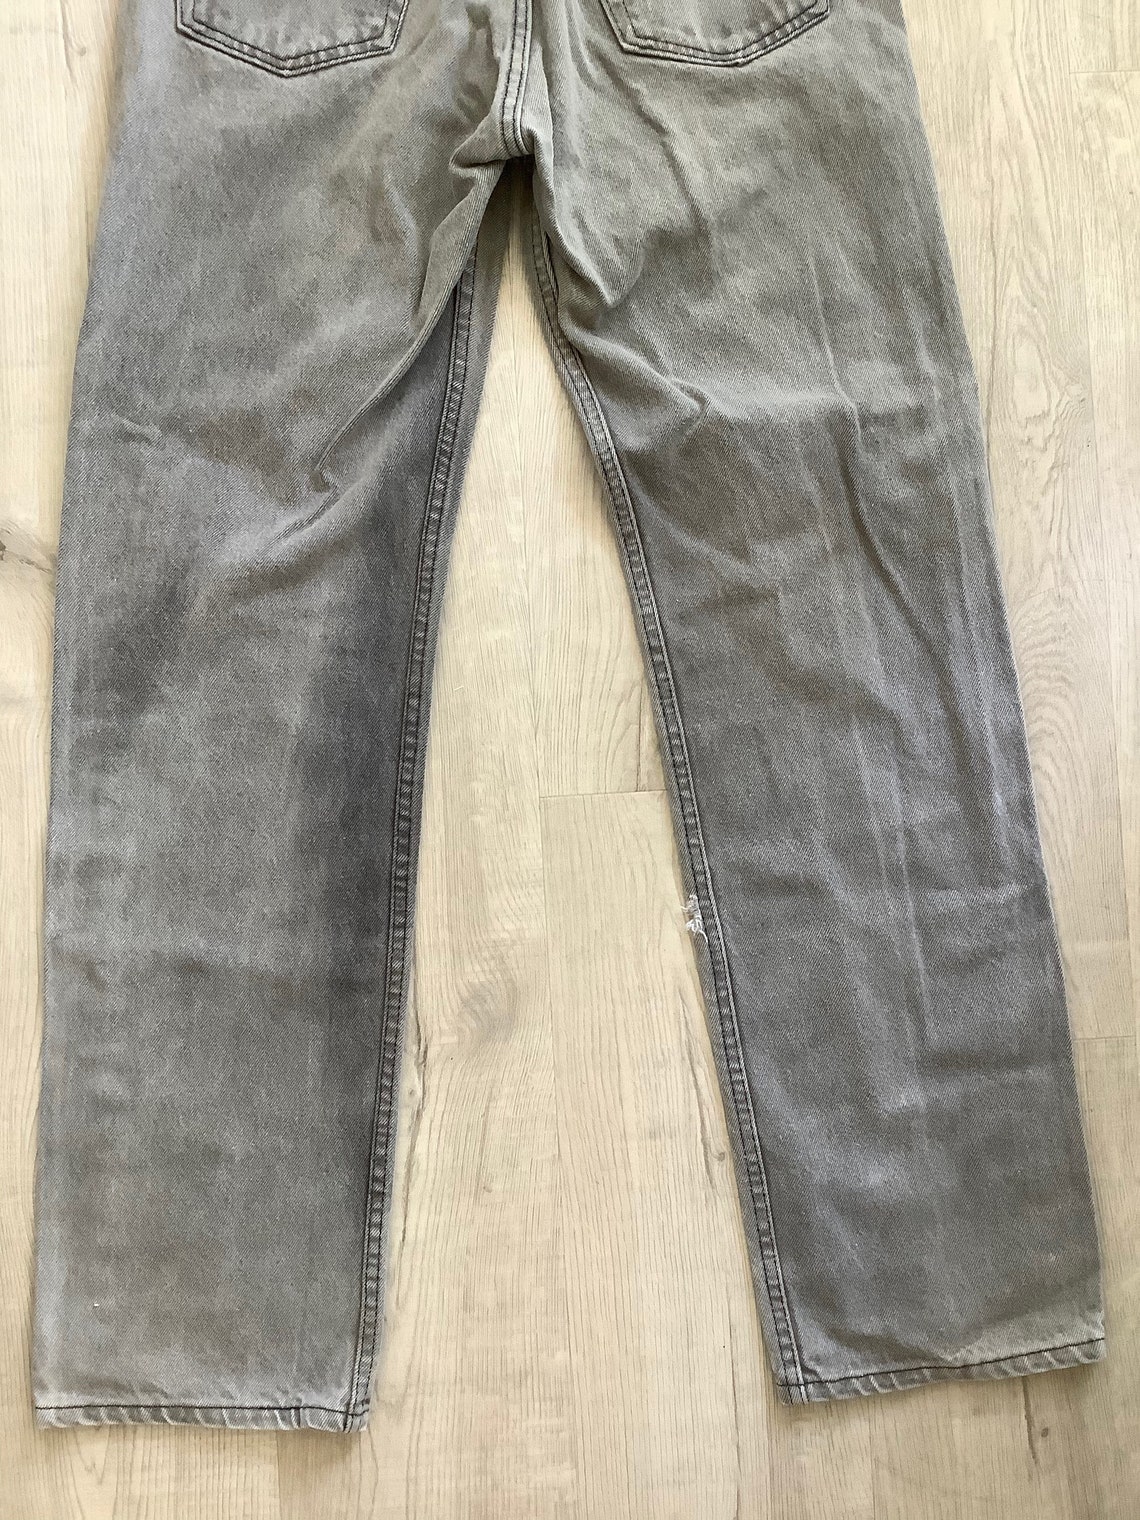 Levis 501 Gray Jeans Size 30Levi Grey Gray Jeans Size 30Gray | Etsy